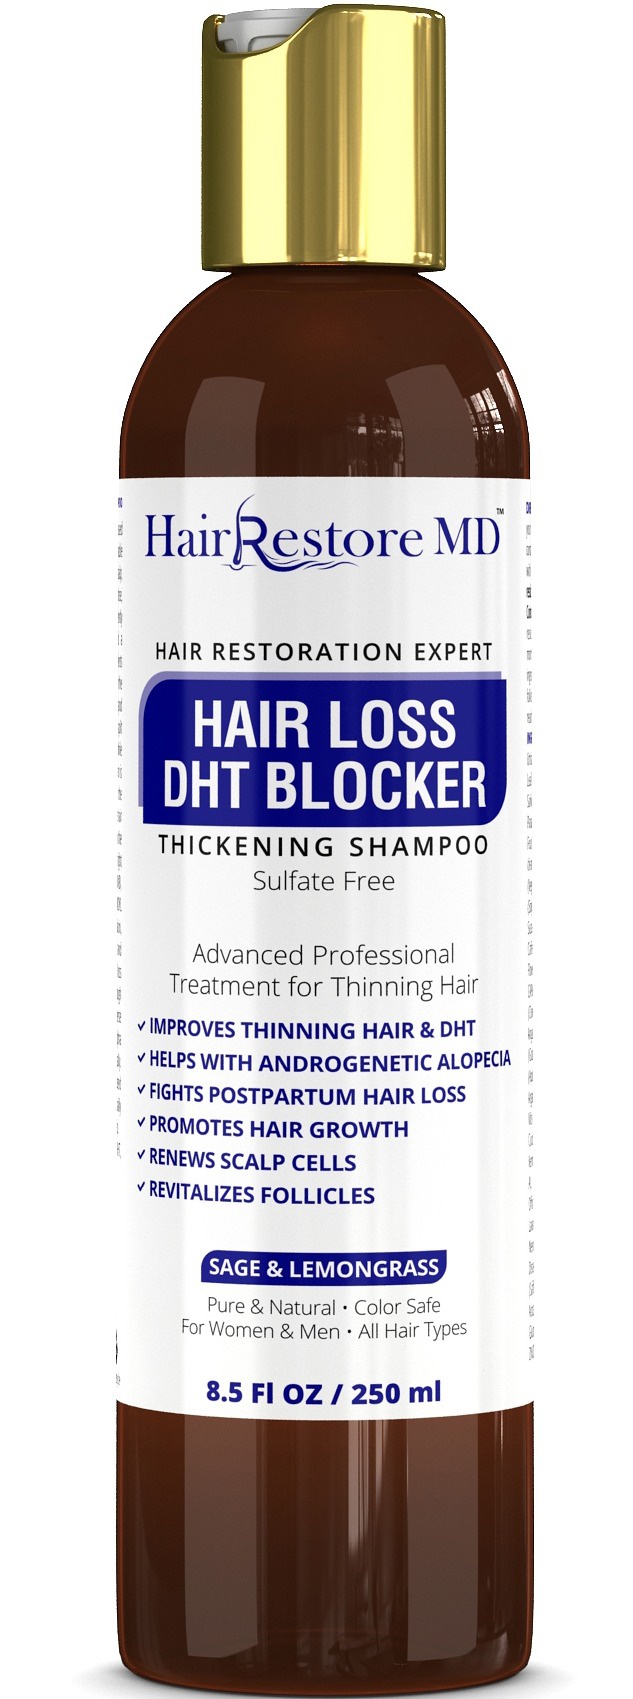 Botanical Green Care "Sage & Lemongrass" Hair Loss Dht Blocker Sulfate-free Shampoo